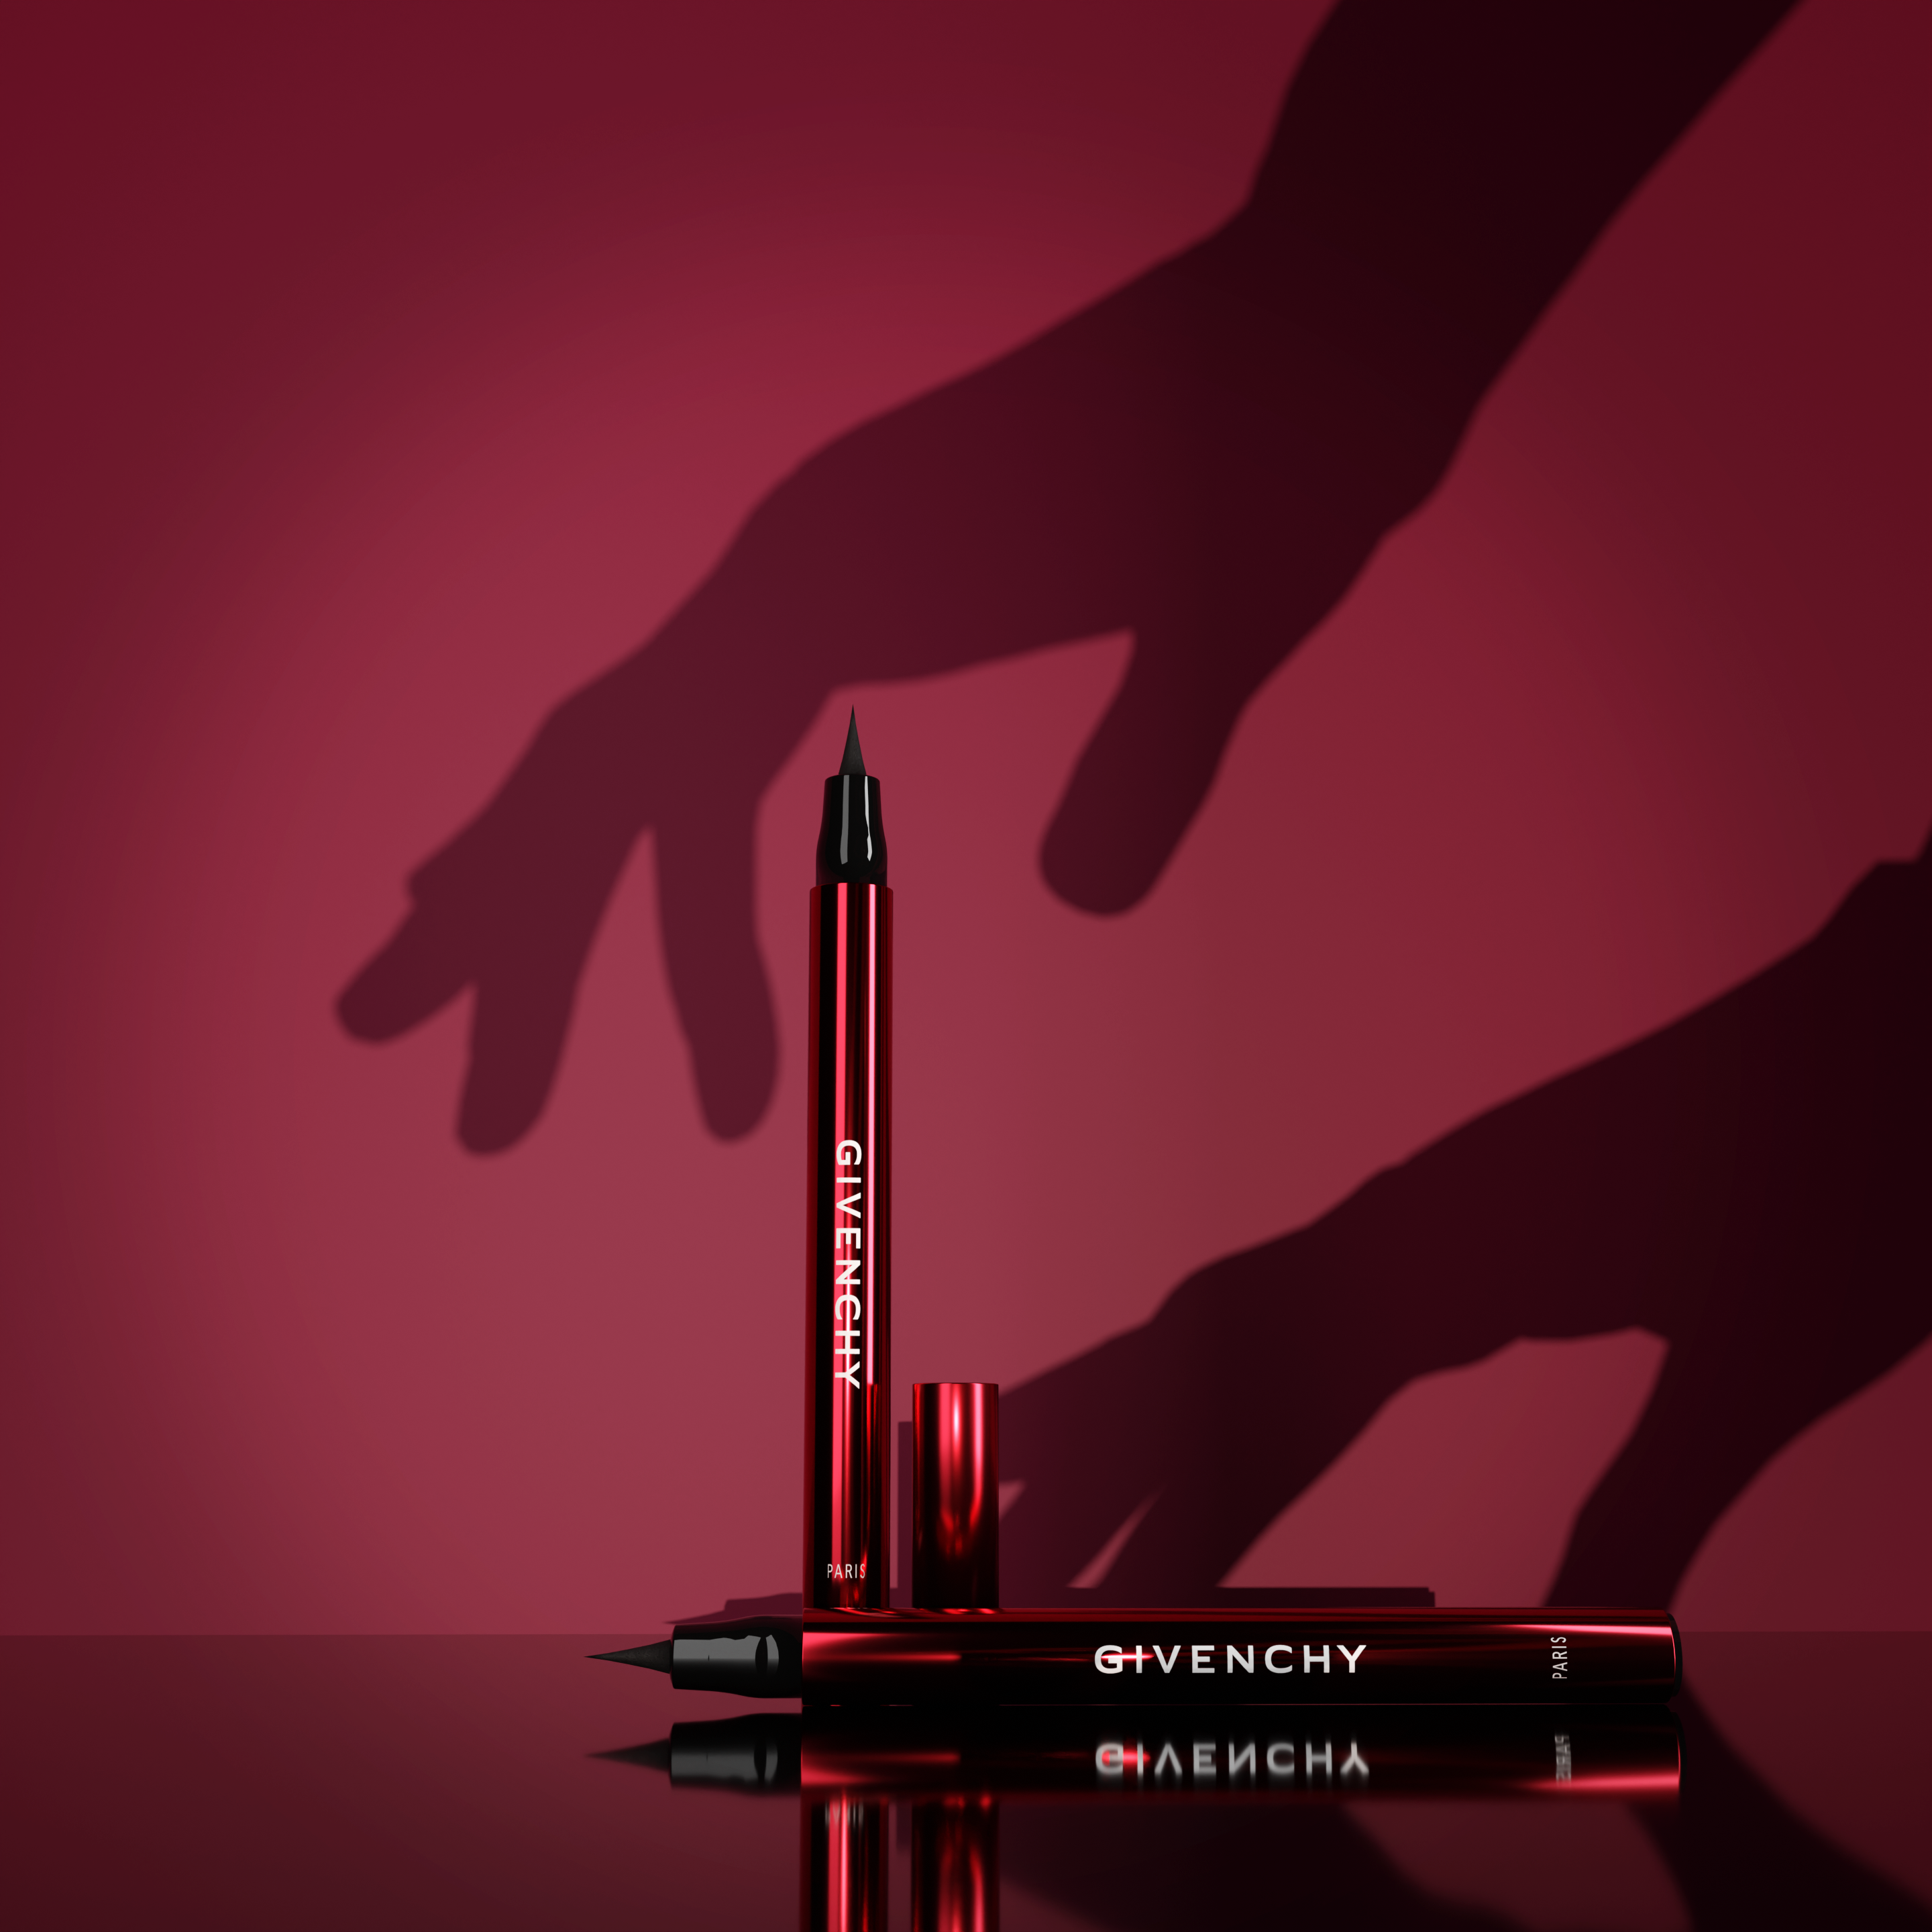 A CGI photography of Givenchy pencil